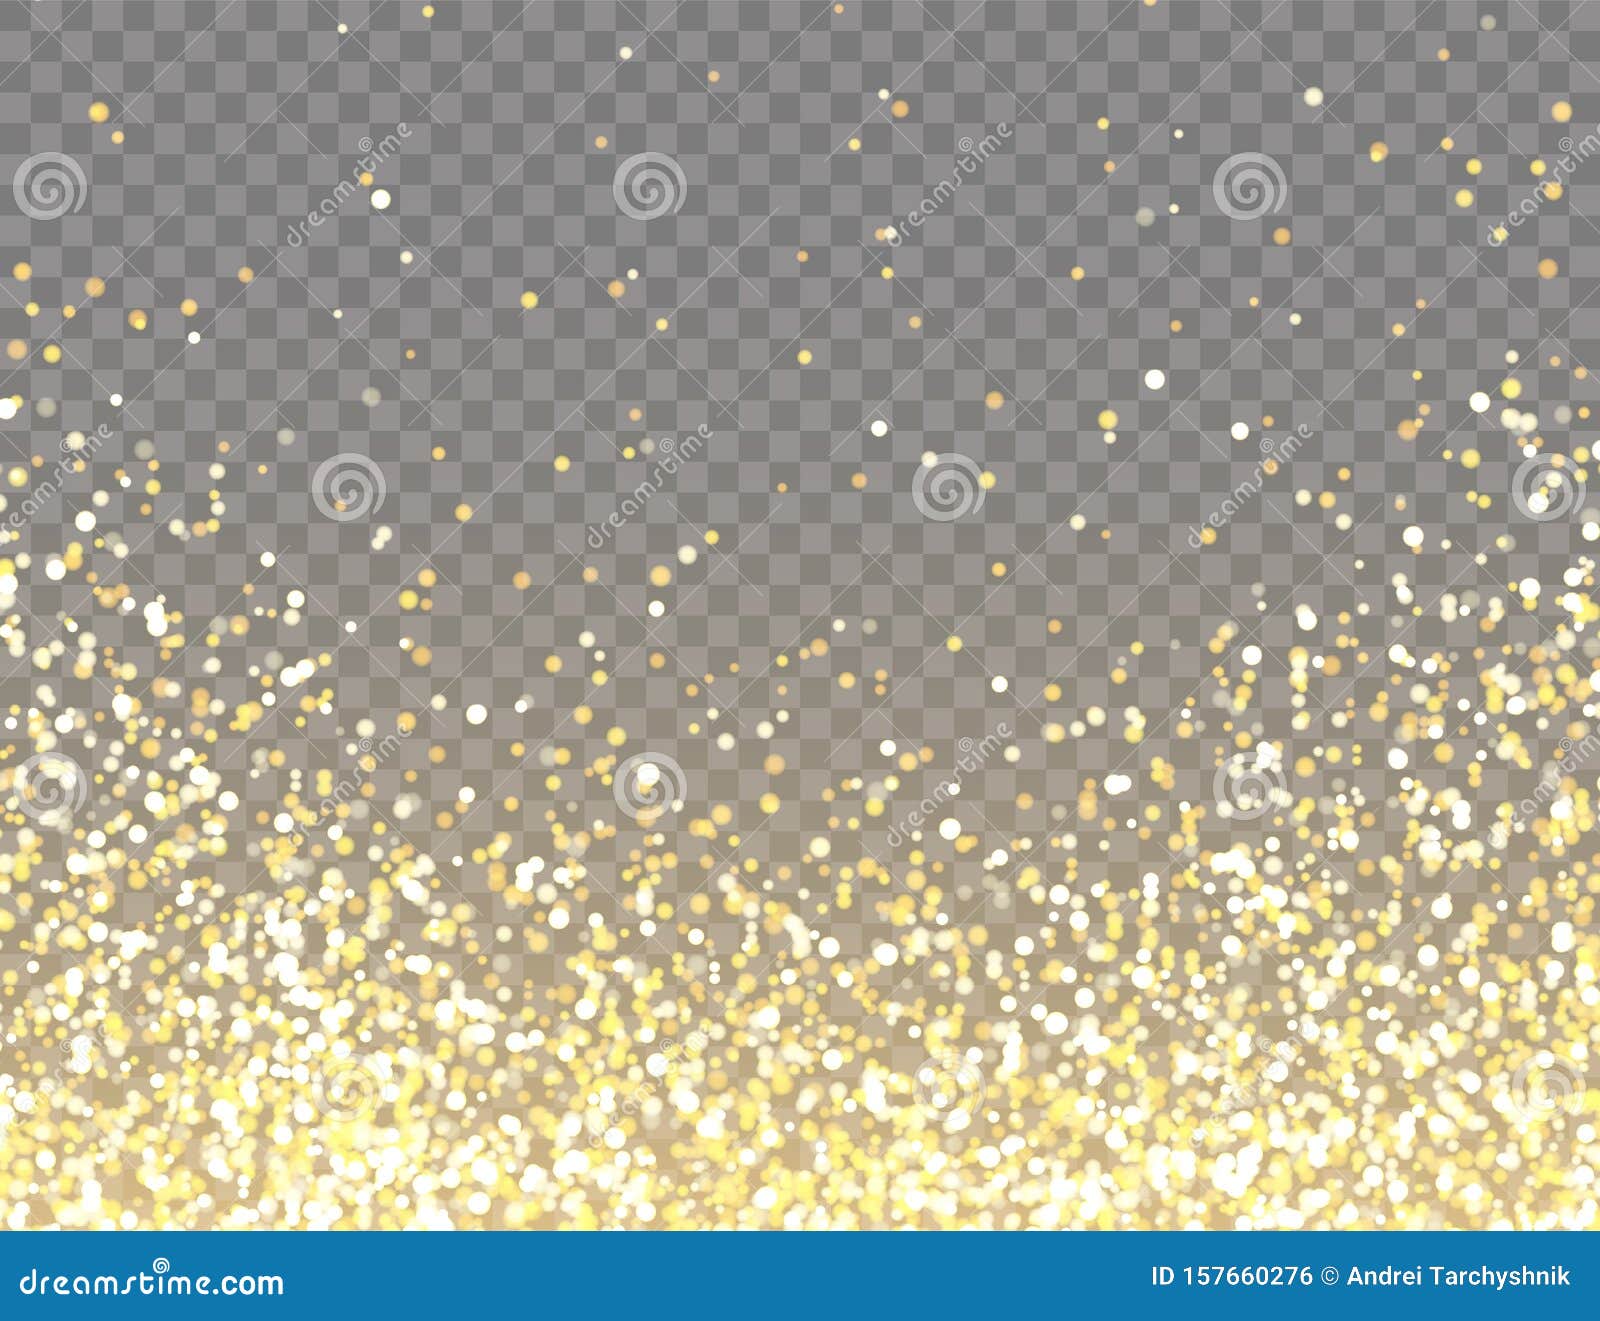 Sparkling Golden Glitter With Bokeh Lights On Transparent Vector